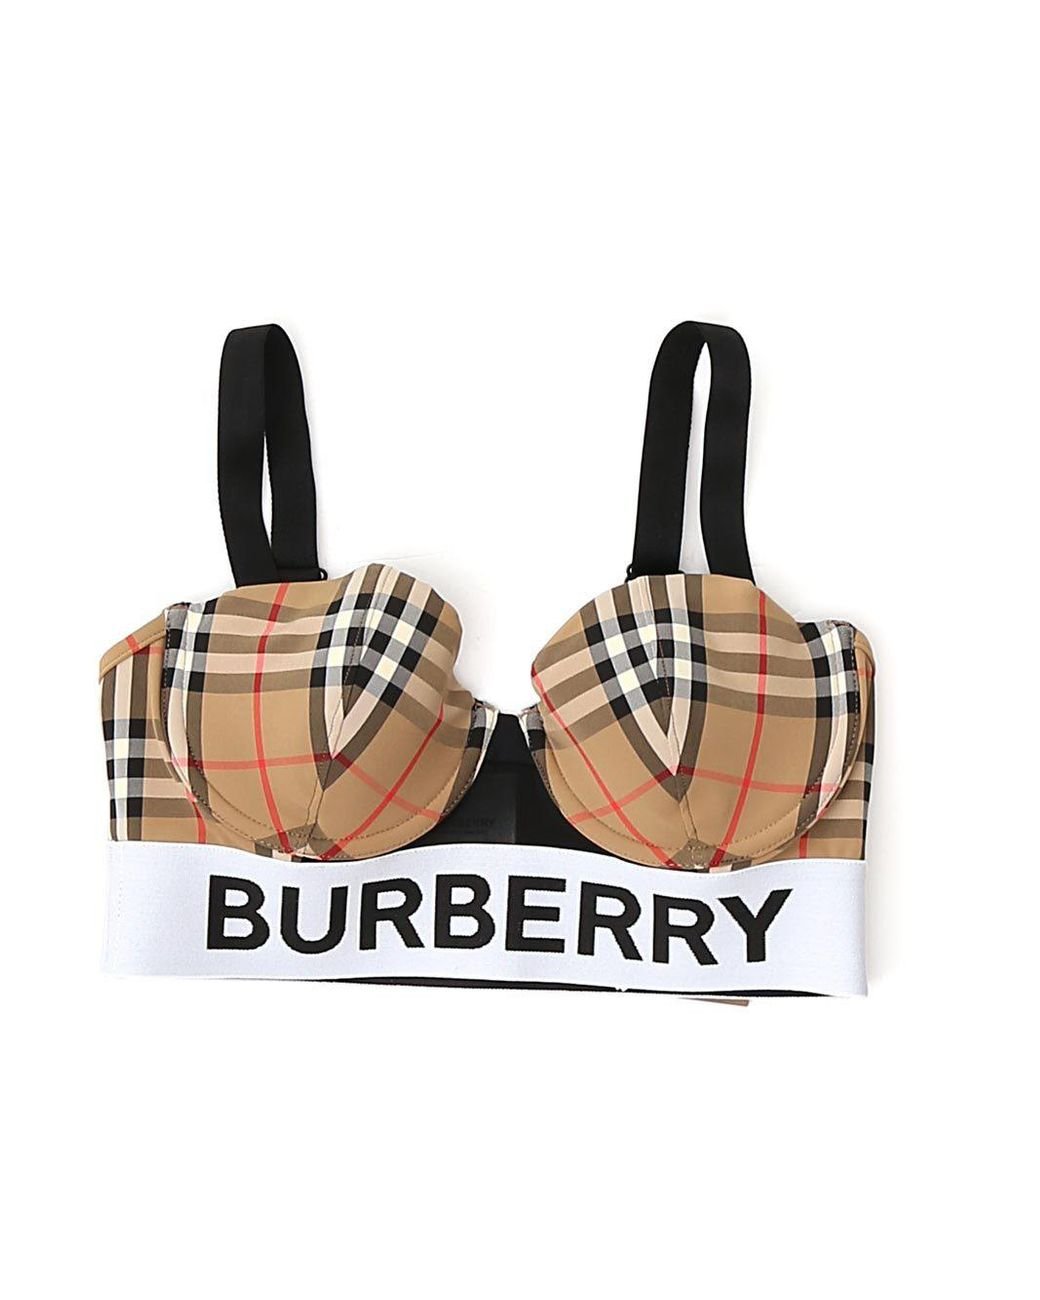 Actualizar 97+ imagen burberry logo vintage check bra